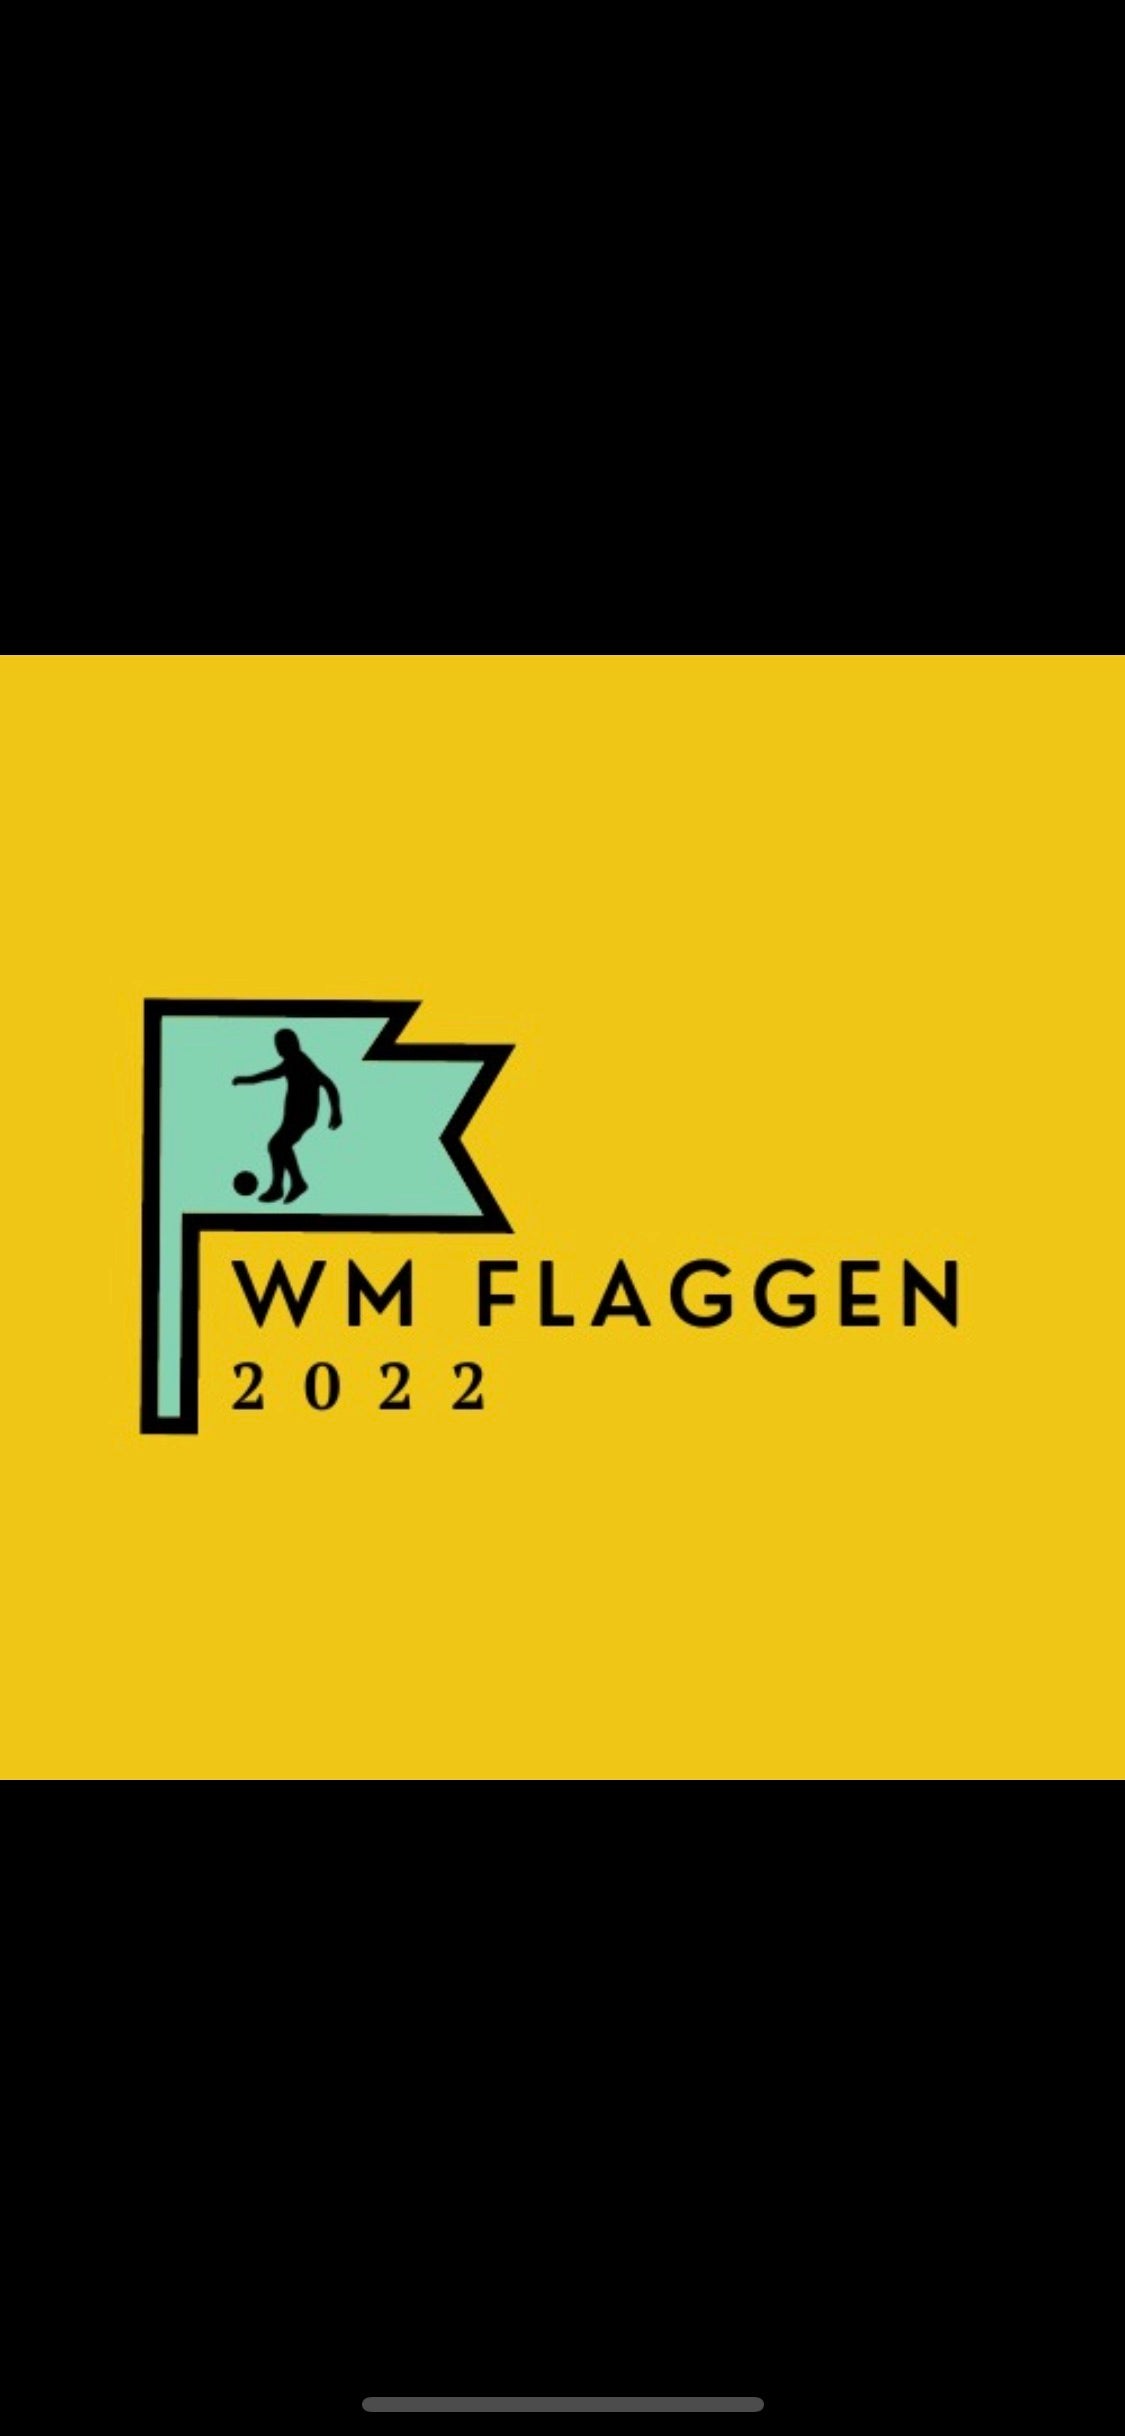 wmflaggen.com